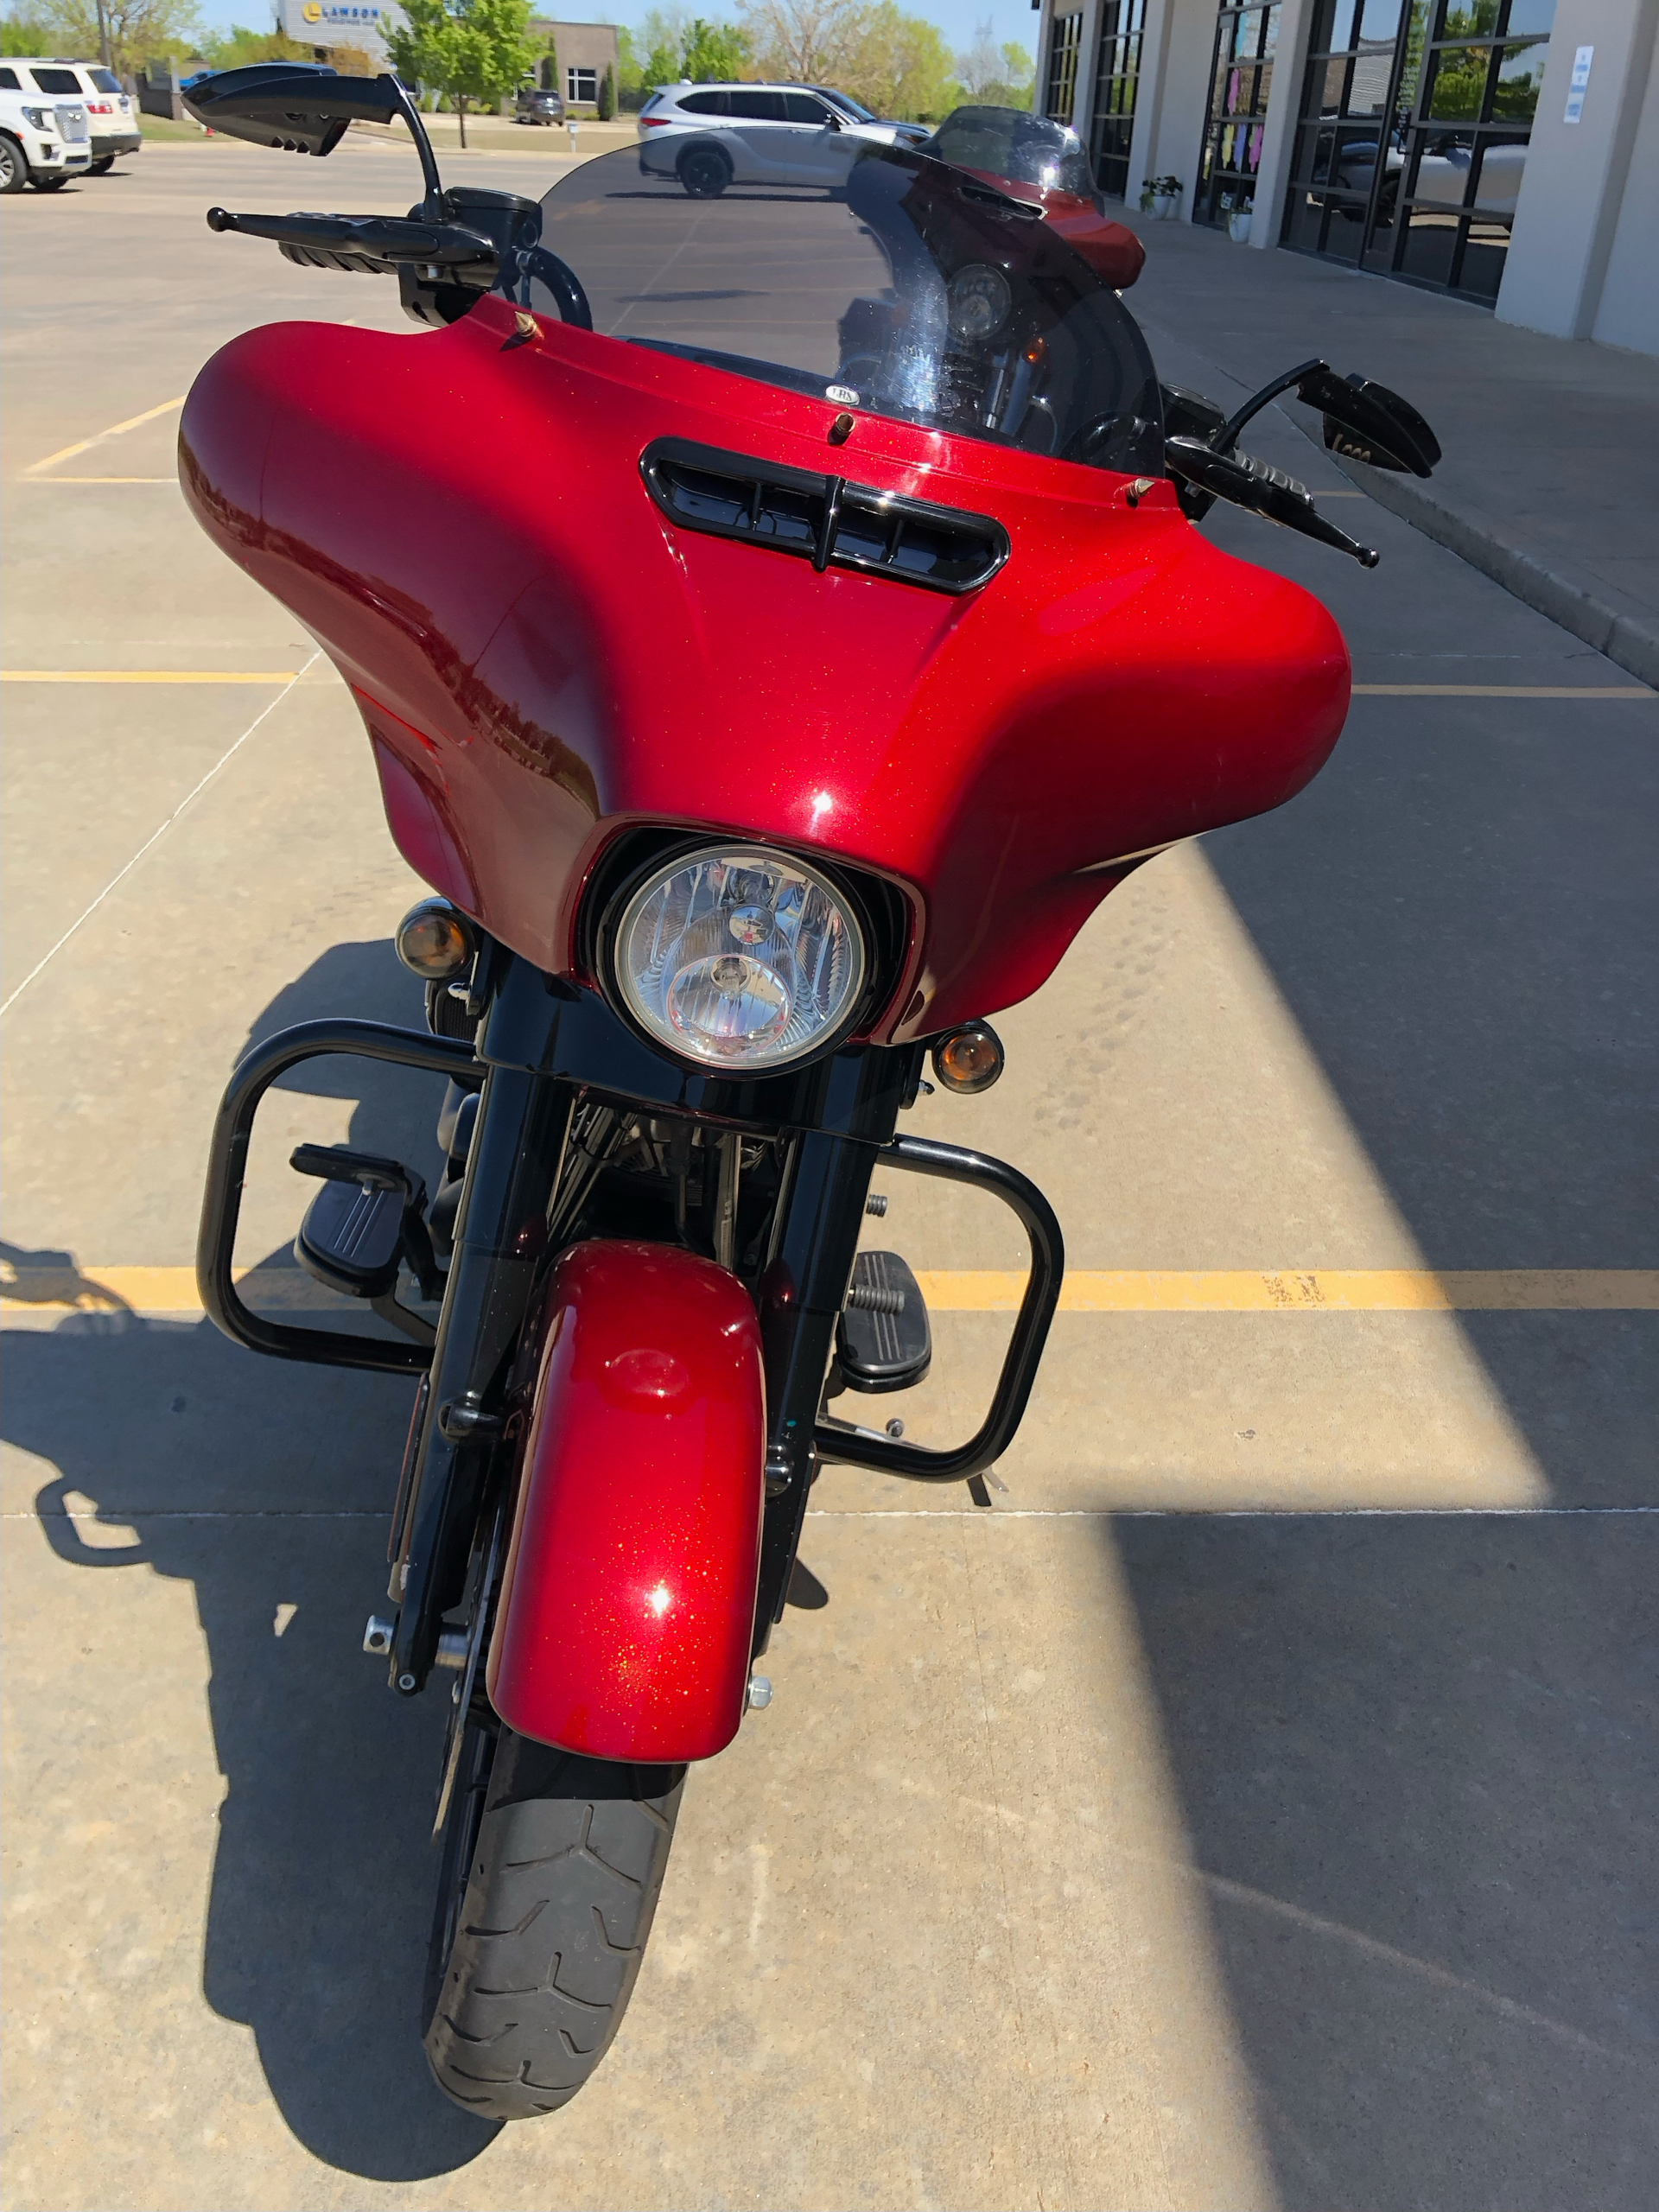 2018 Harley-Davidson Street Glide® Special in Norman, Oklahoma - Photo 3